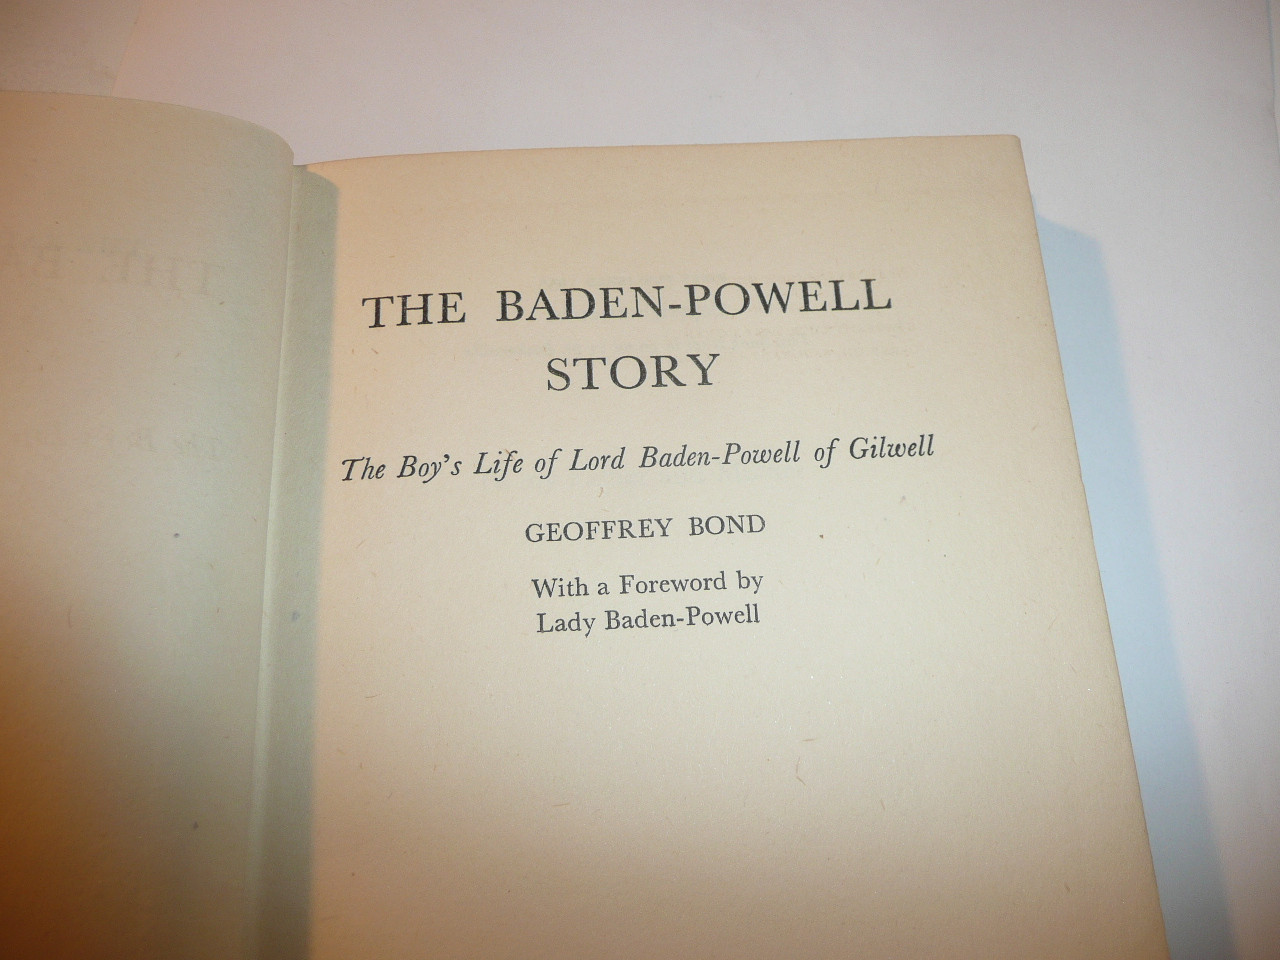 1955 The Baden-Powell Story, By Geoffrey Bond